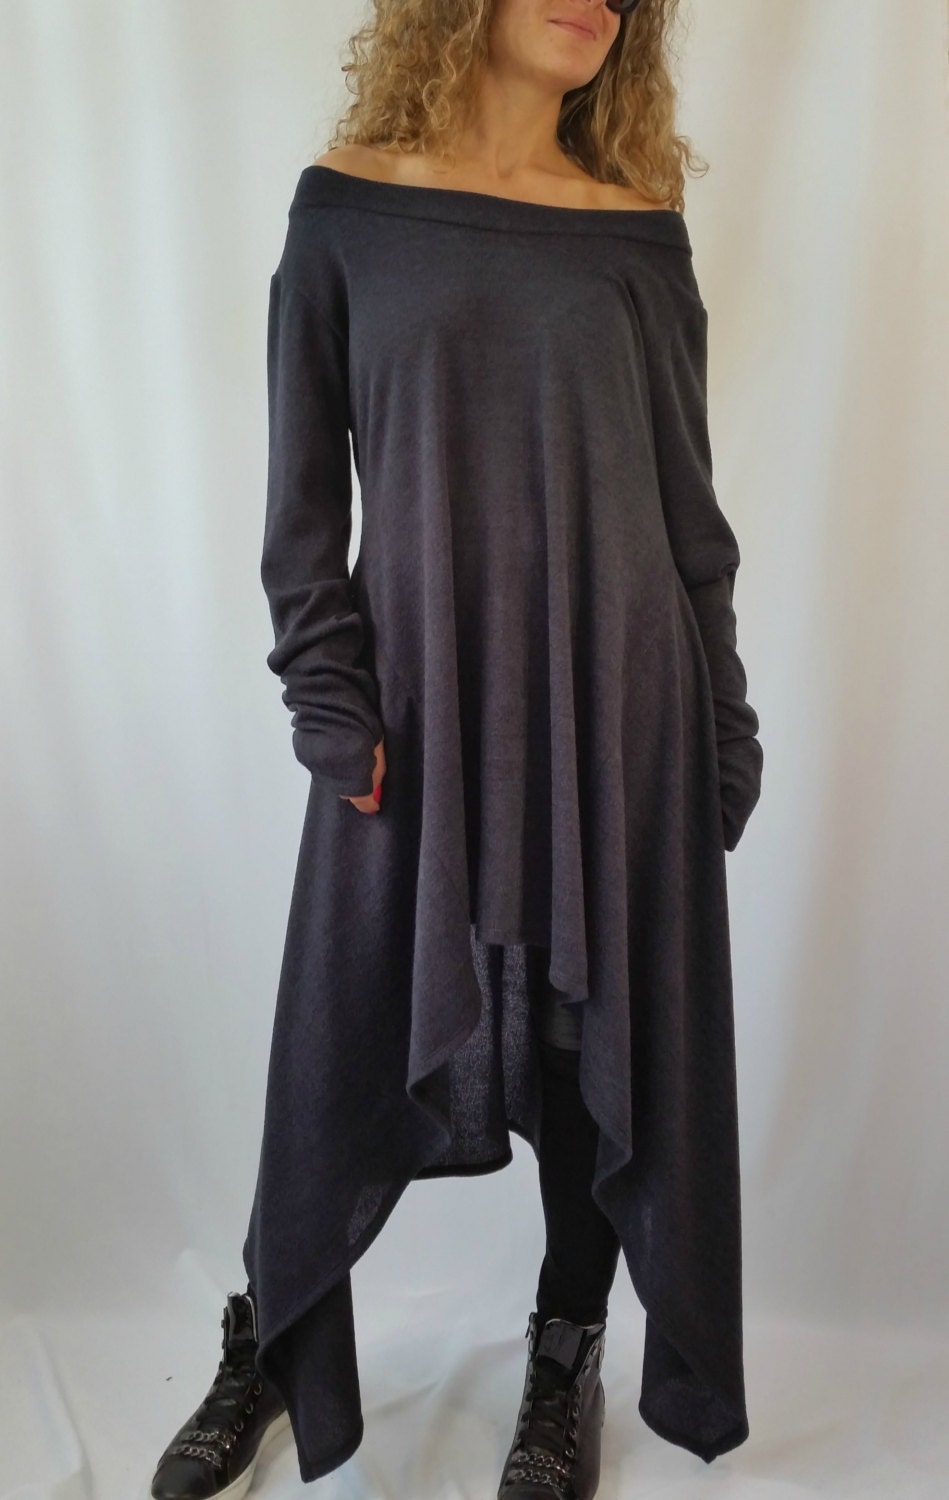 Ladies long dark grey cardigan dress size urban